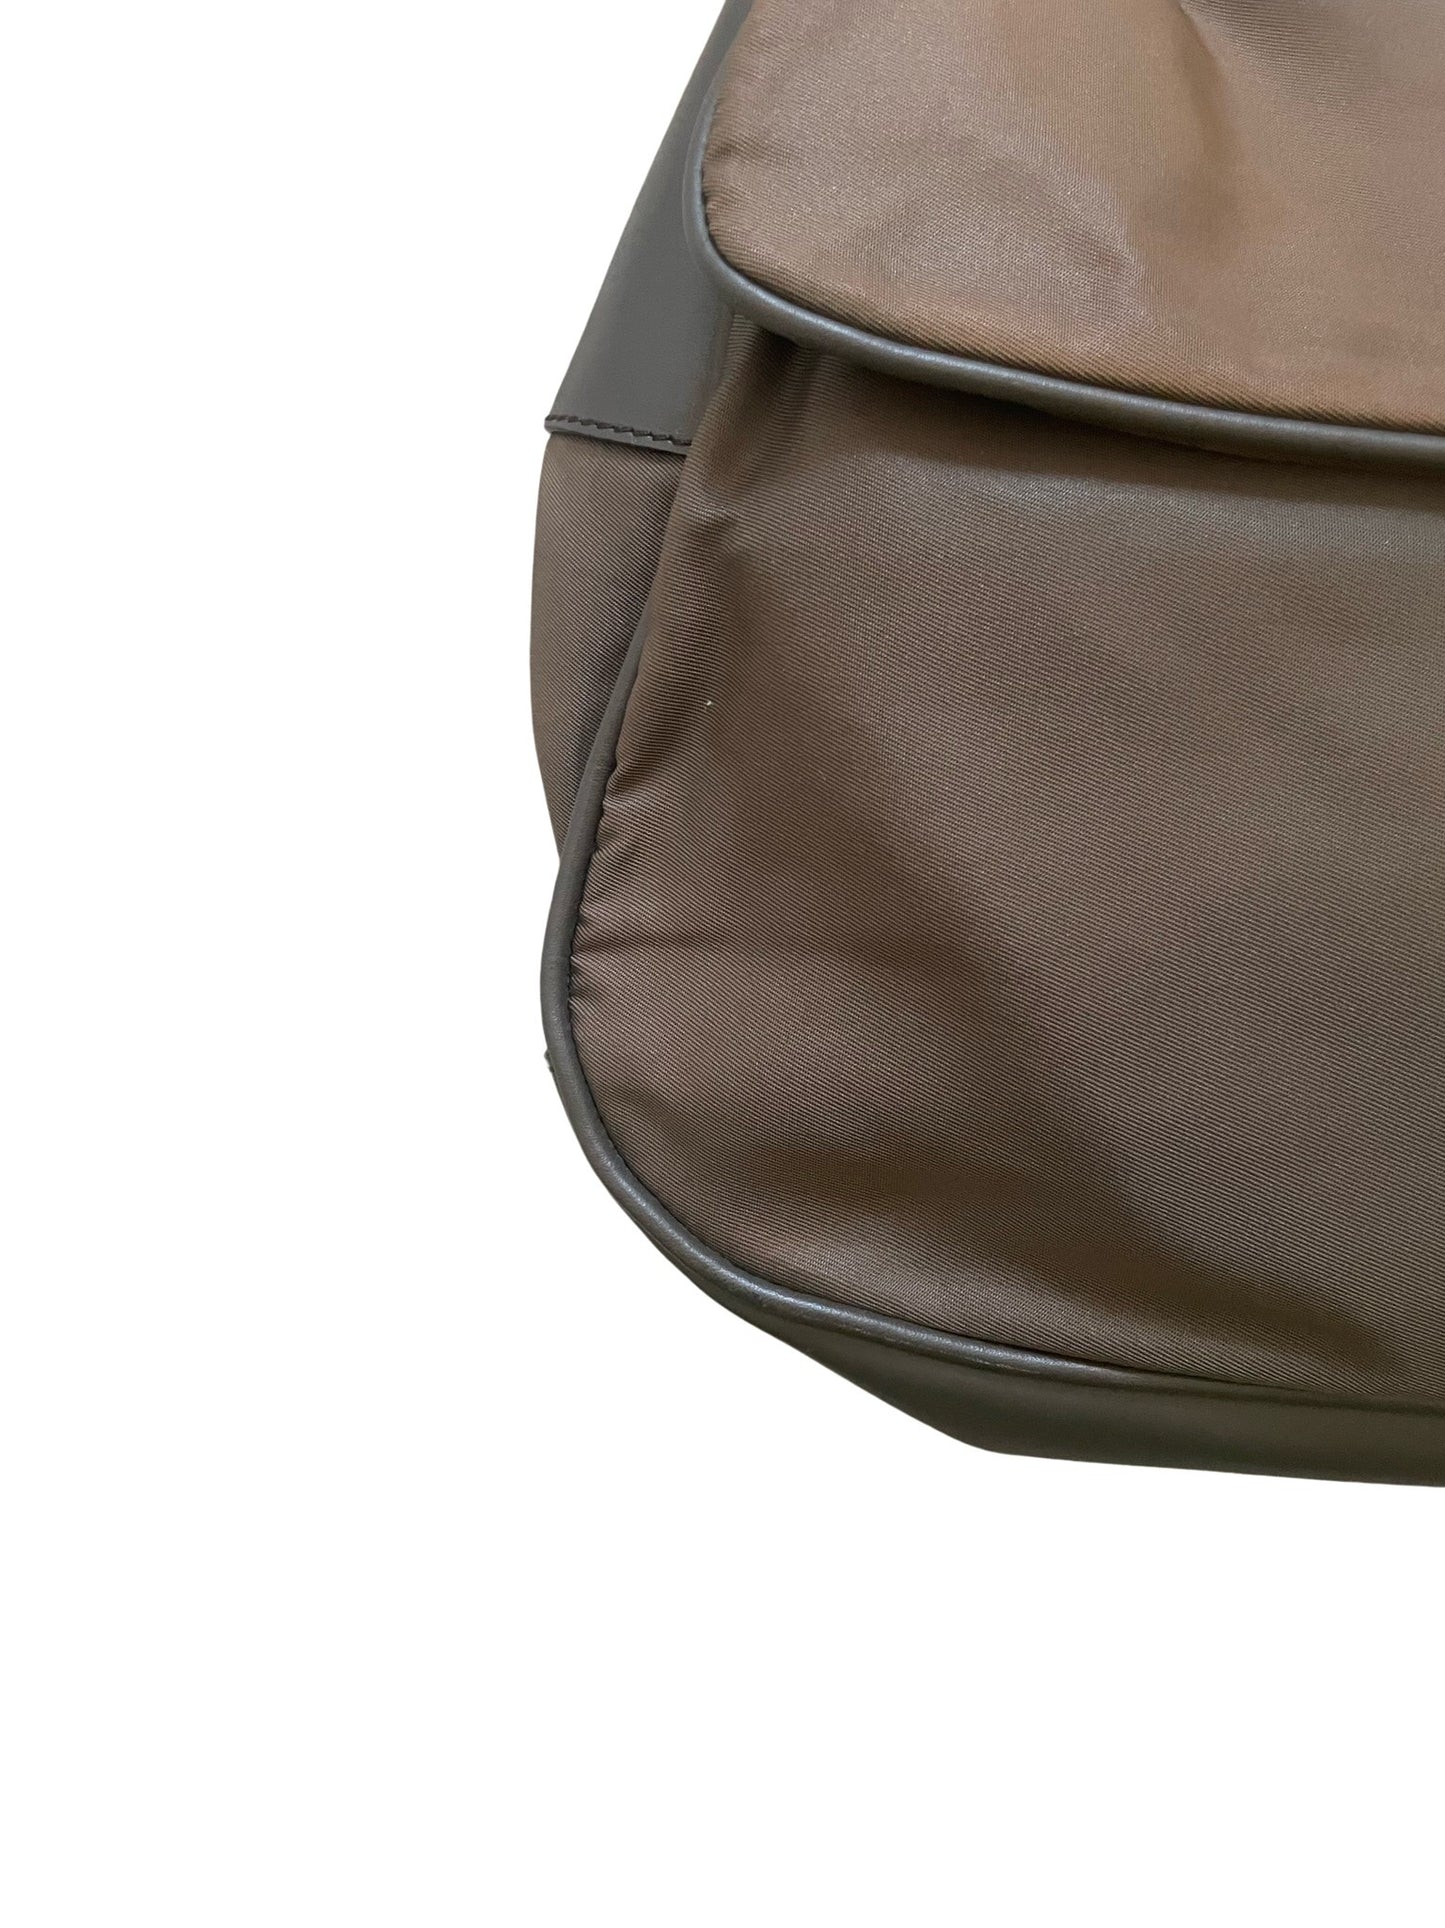 Prada Brown Nylon and Leather Shoulder Bag